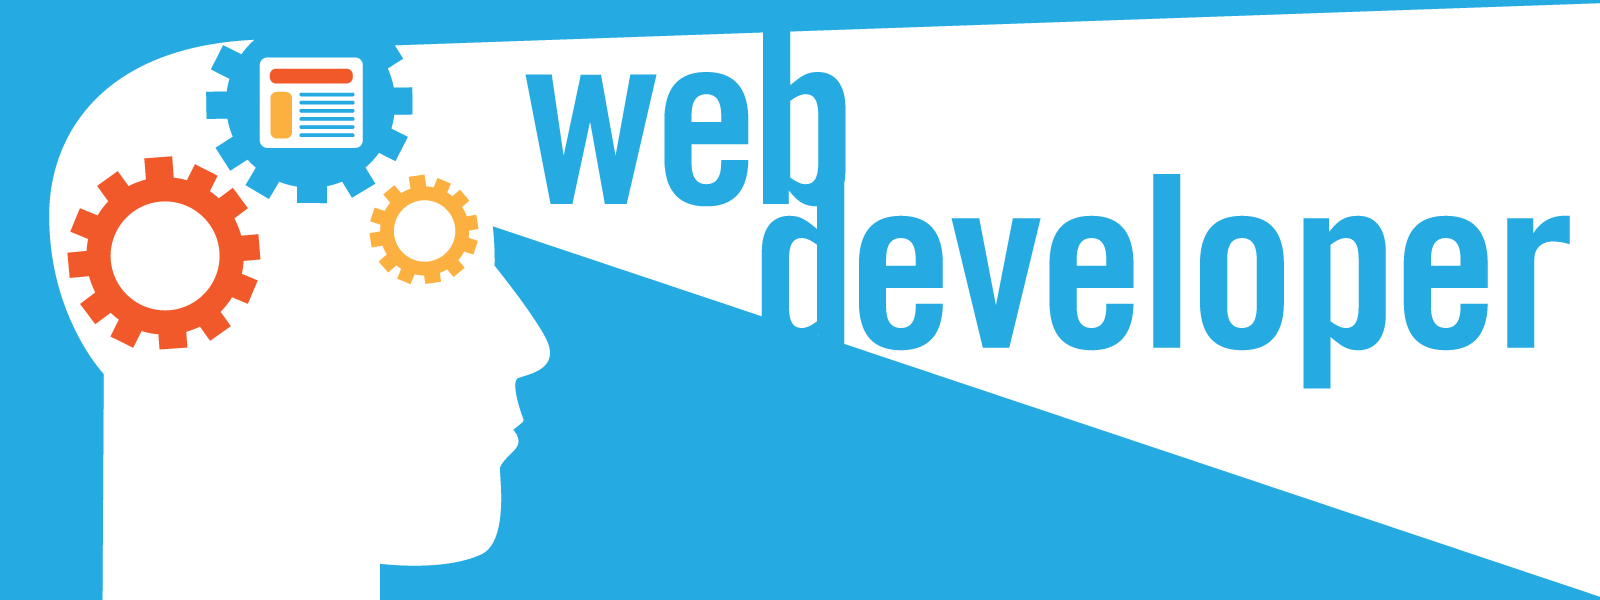 what is web development